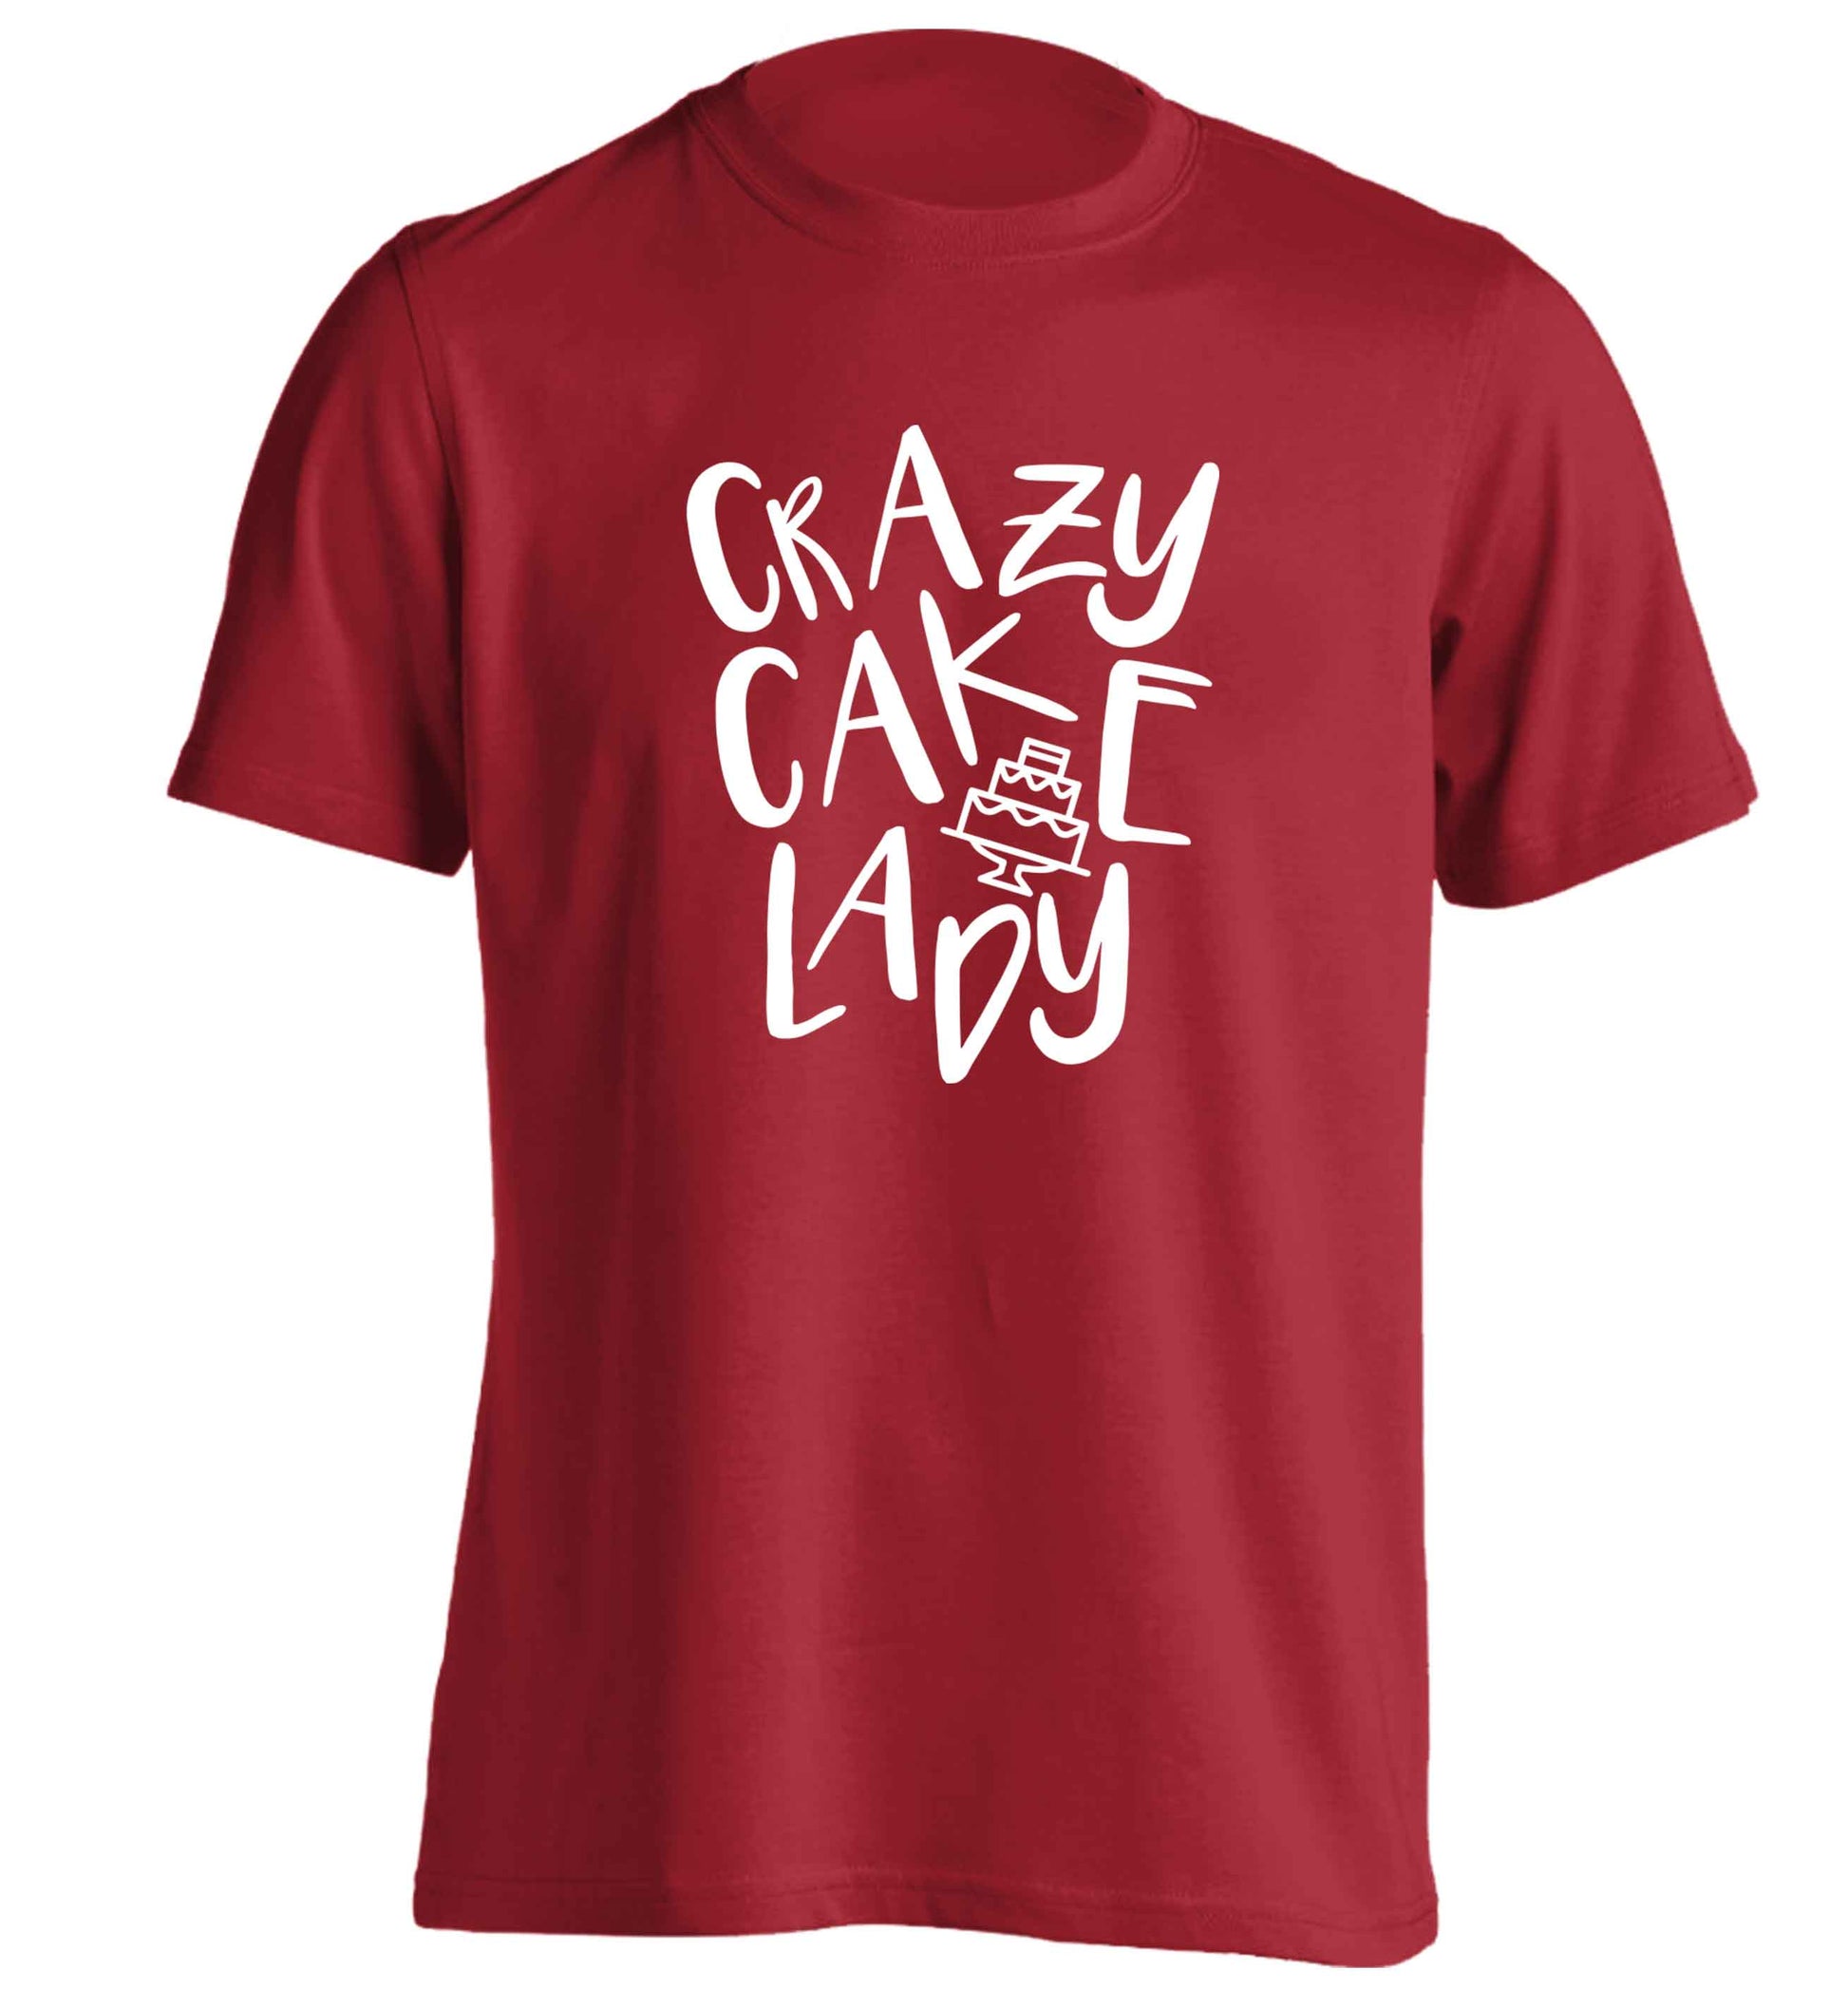 Crazy cake lady adults unisex red Tshirt 2XL